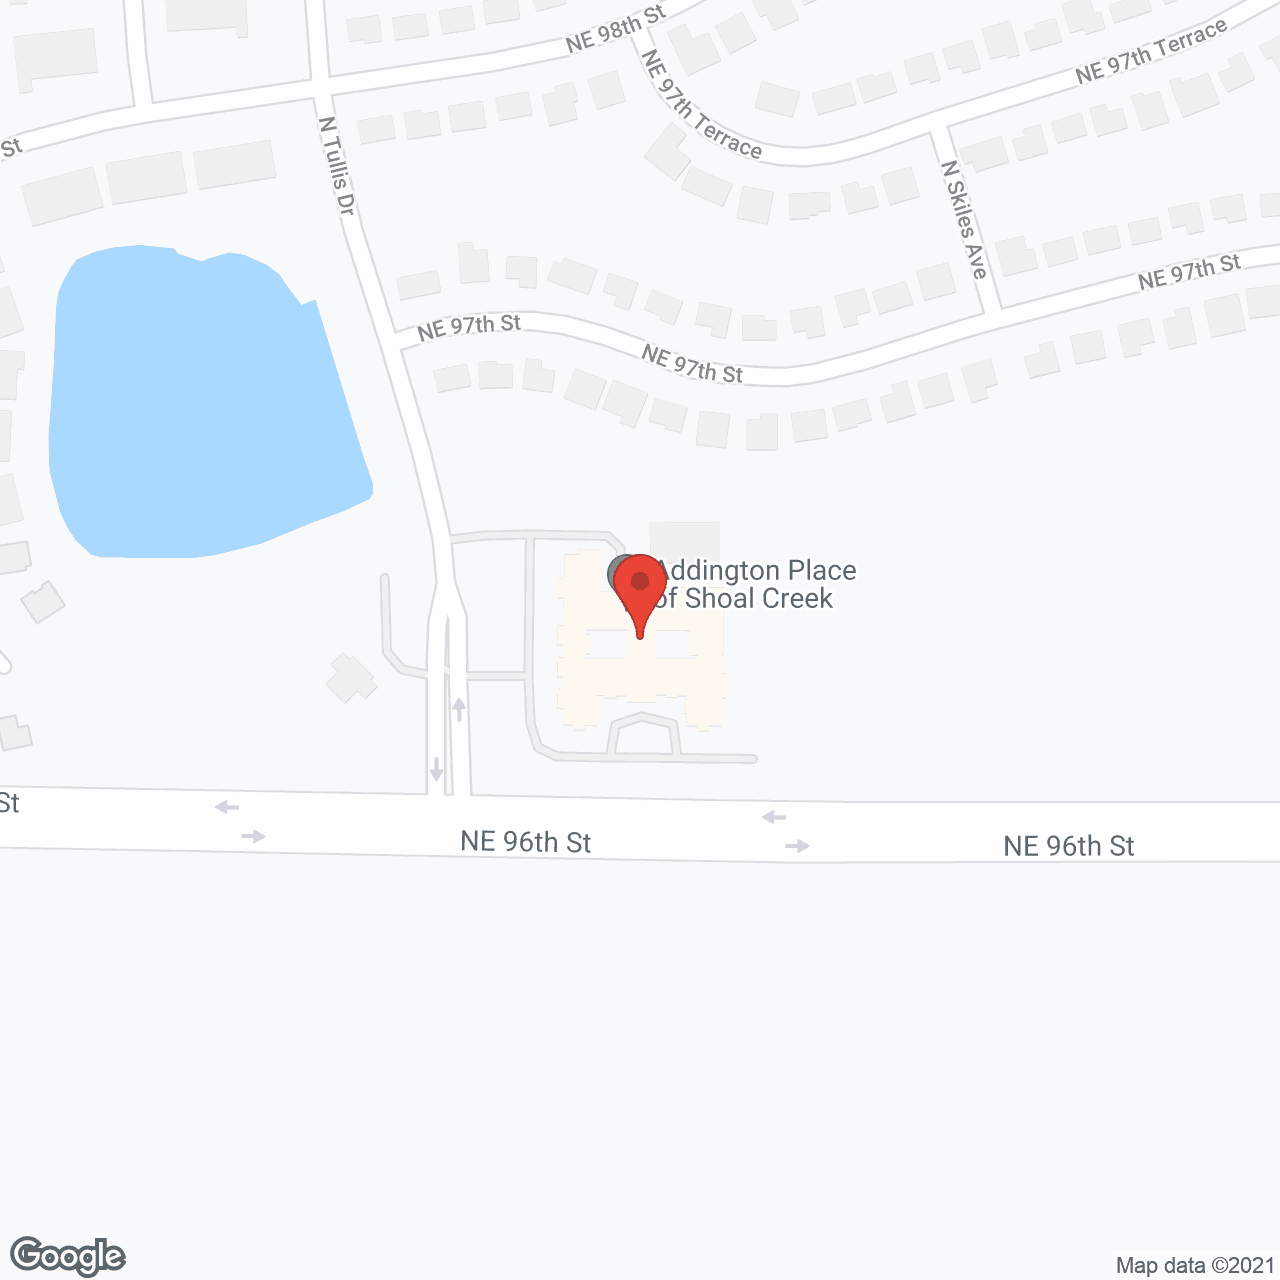 Addington Place of Shoal Creek in google map